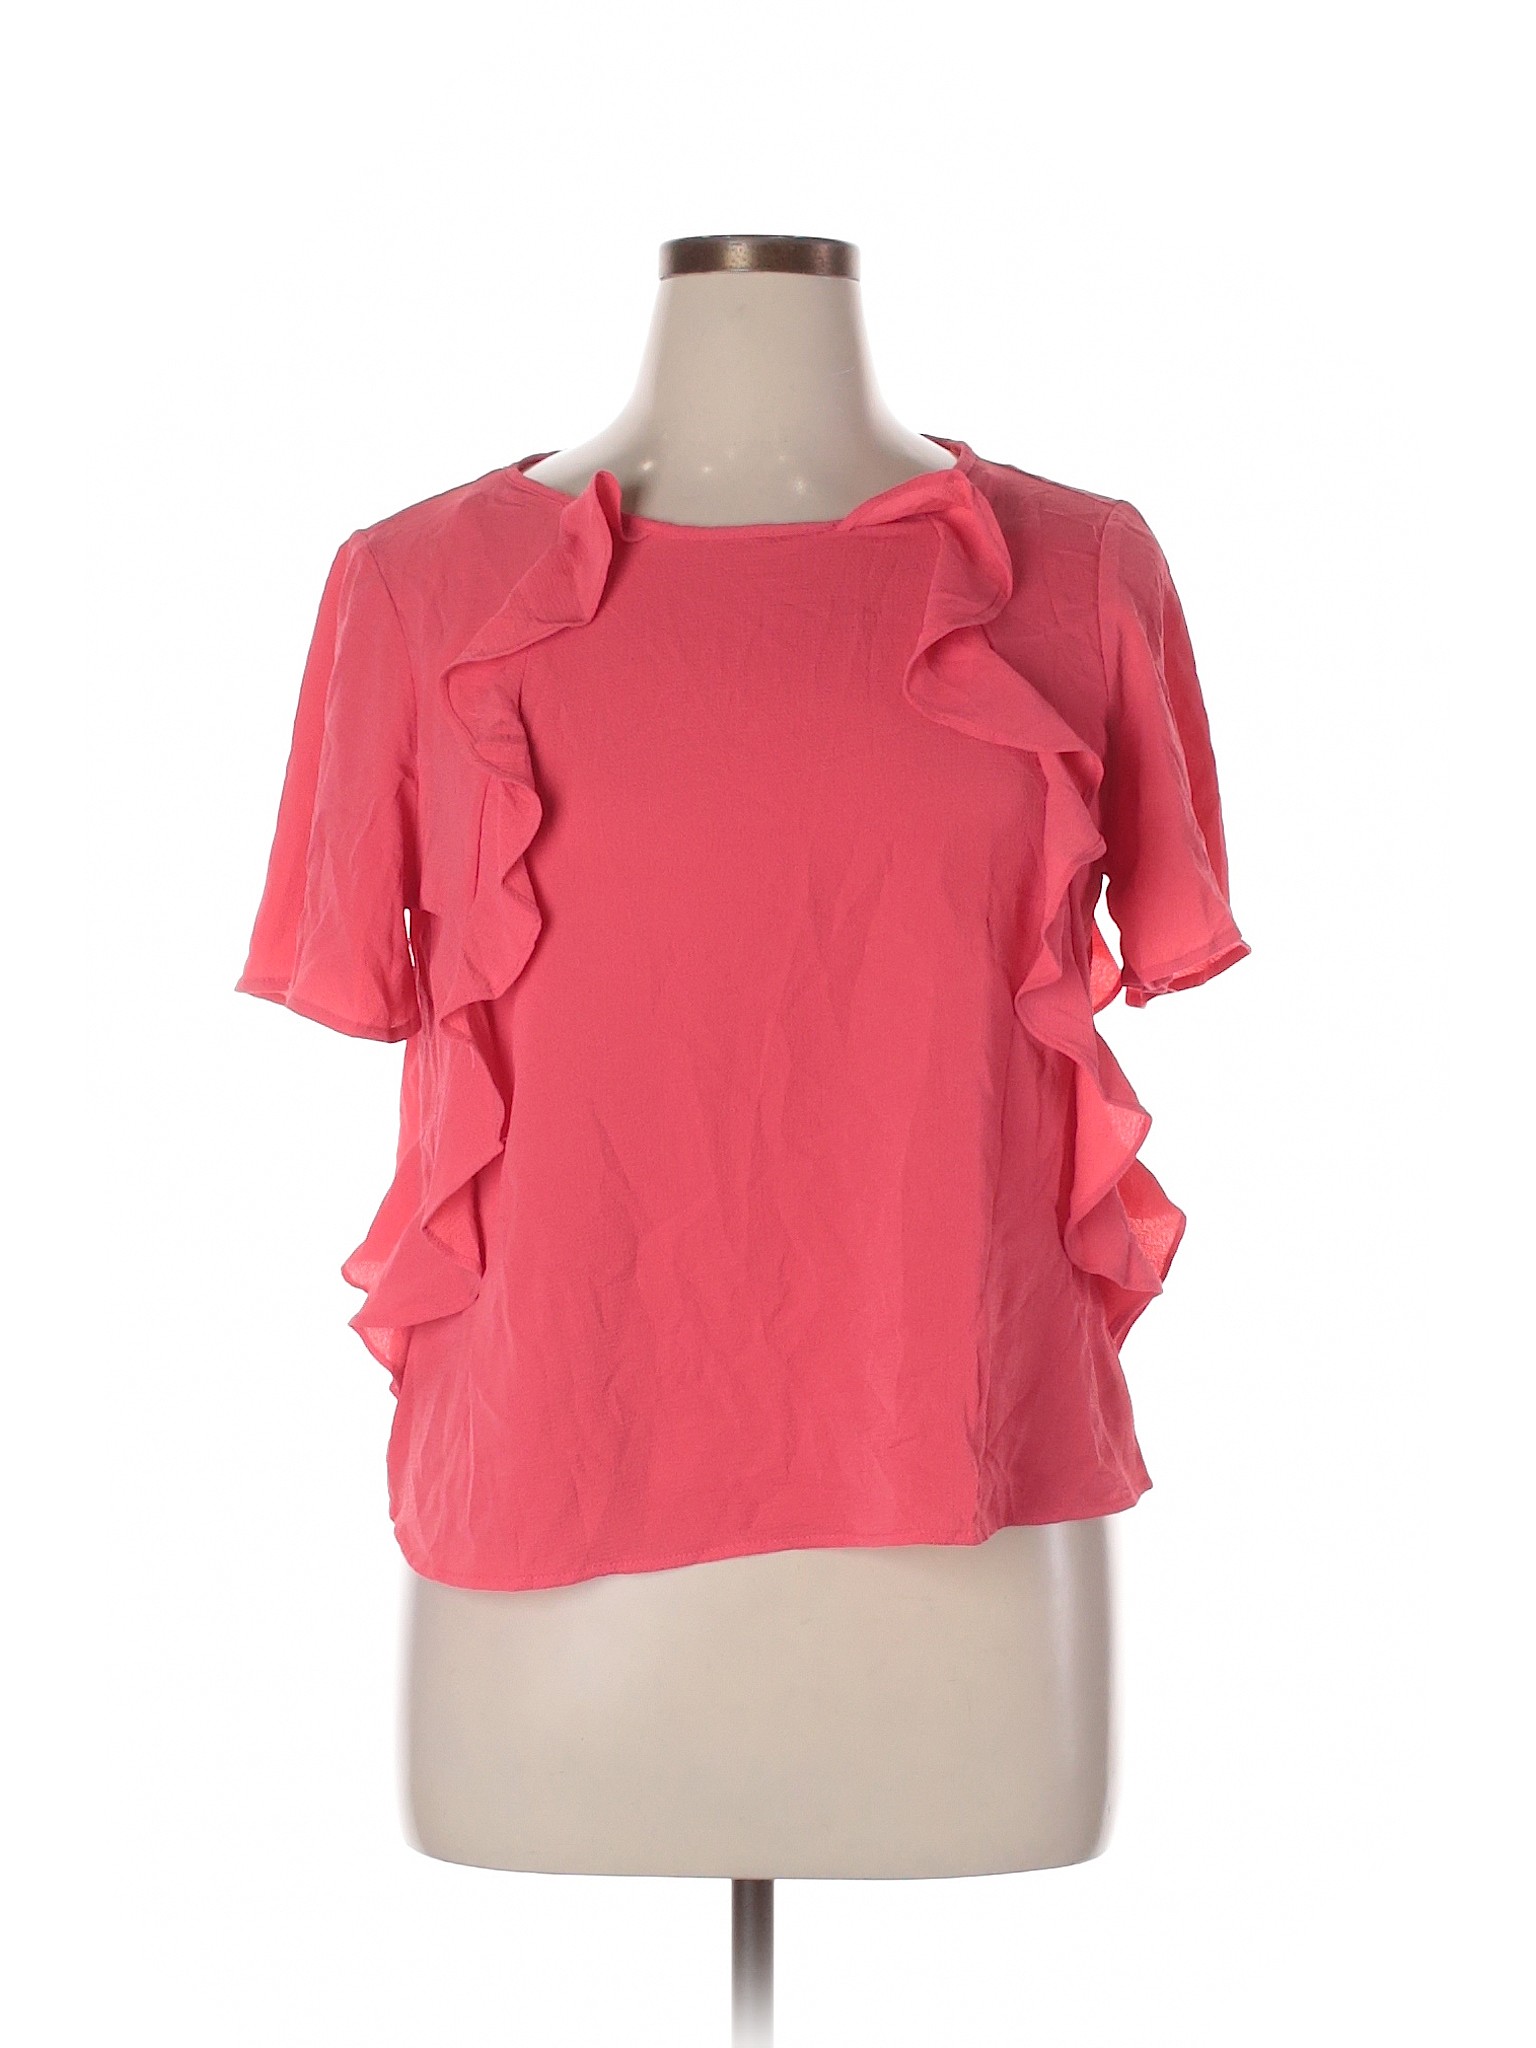 NWT Love J Women Pink Short Sleeve Blouse XL | eBay